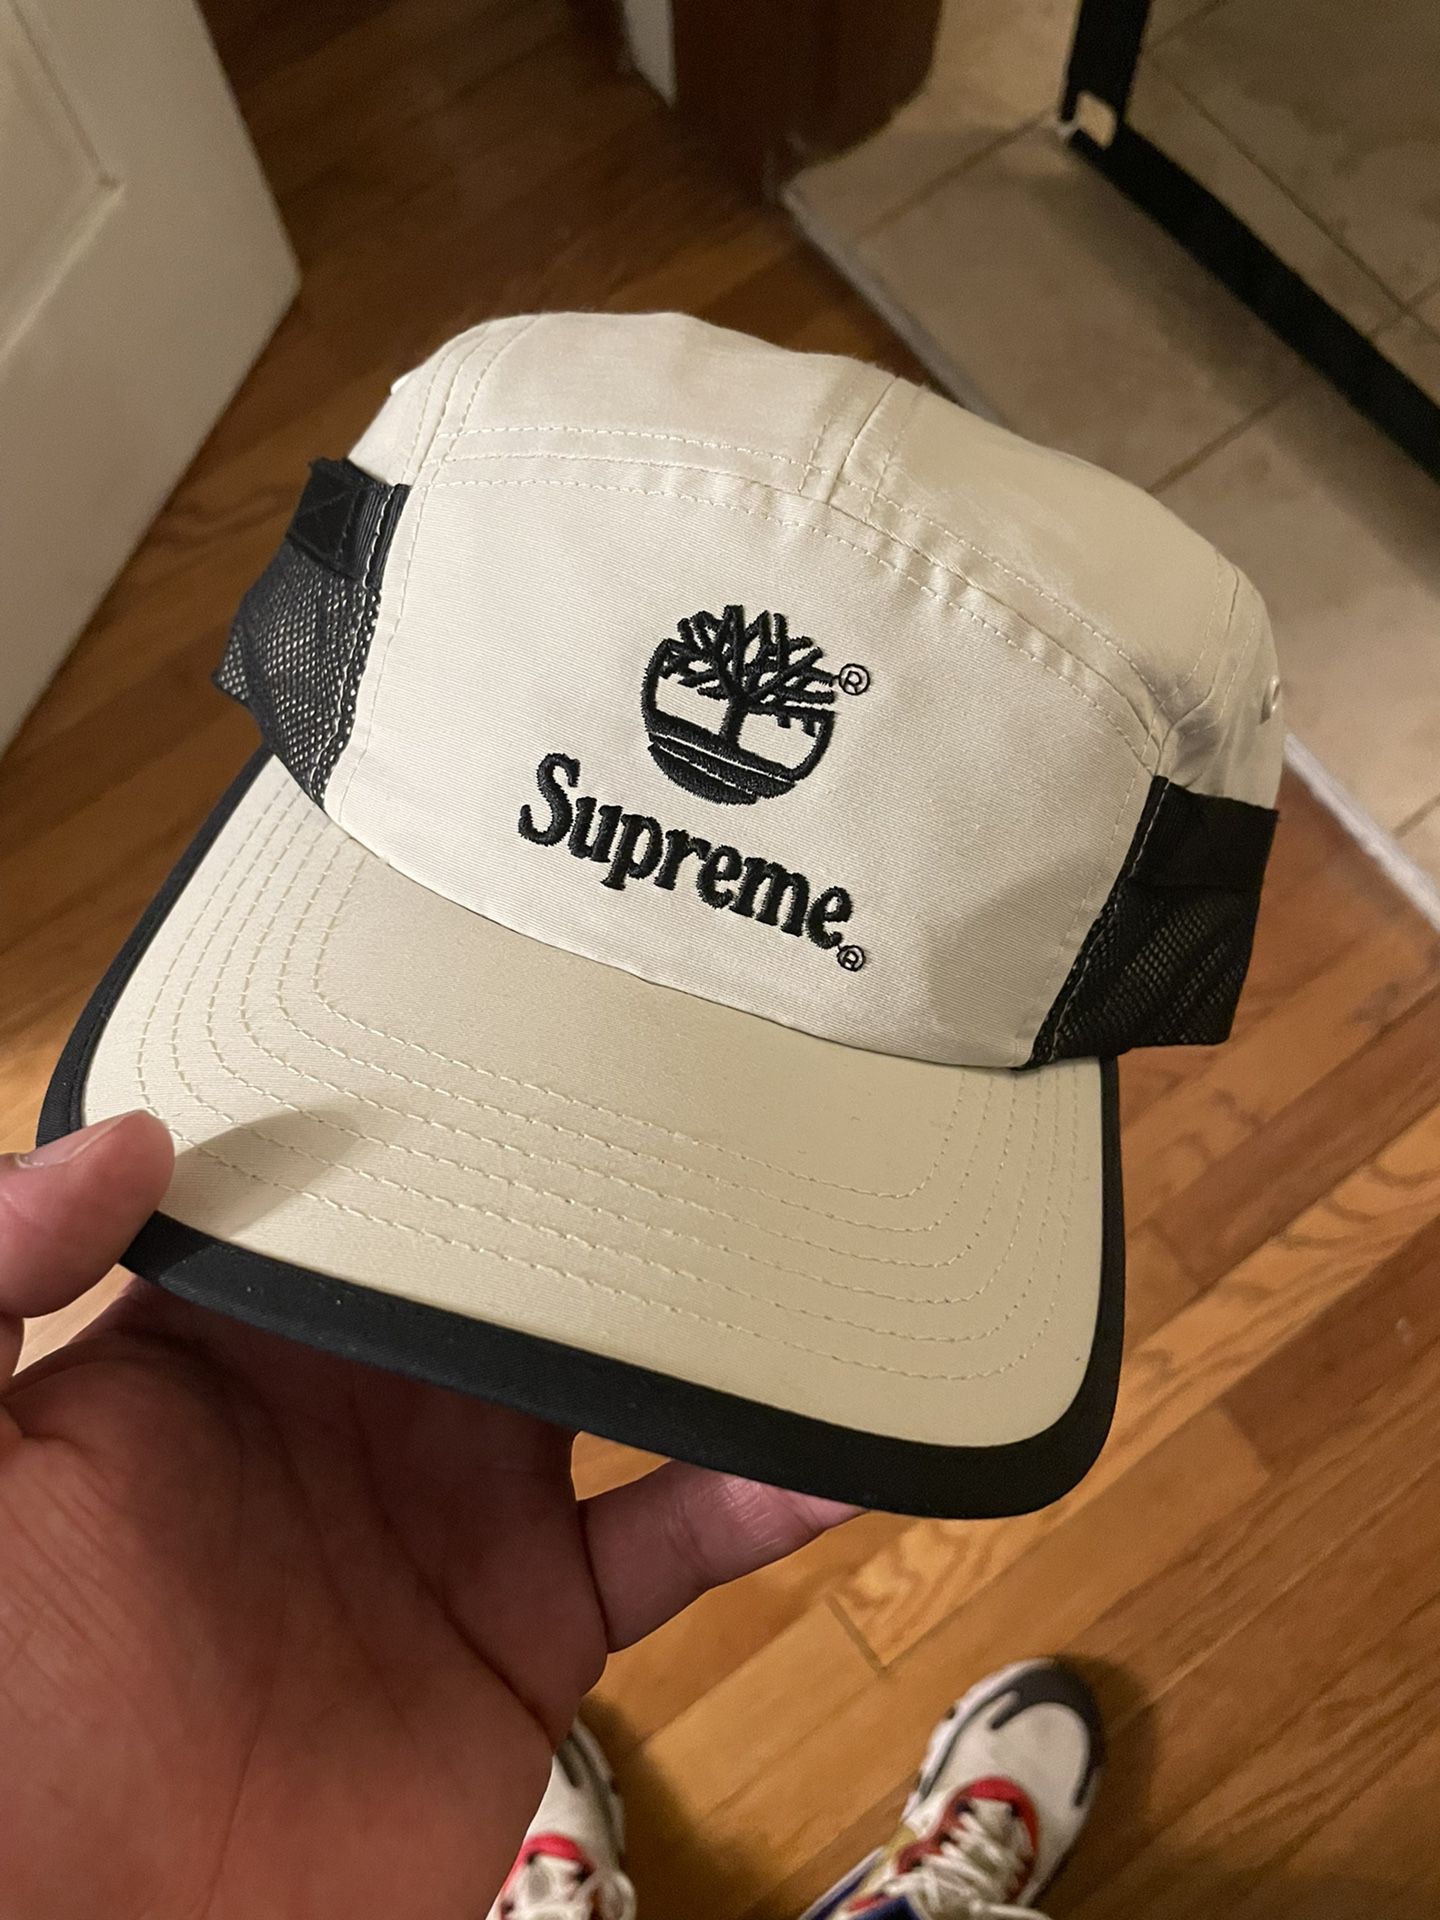 Supreme X Timbaland Collab Hat - $80 Obo